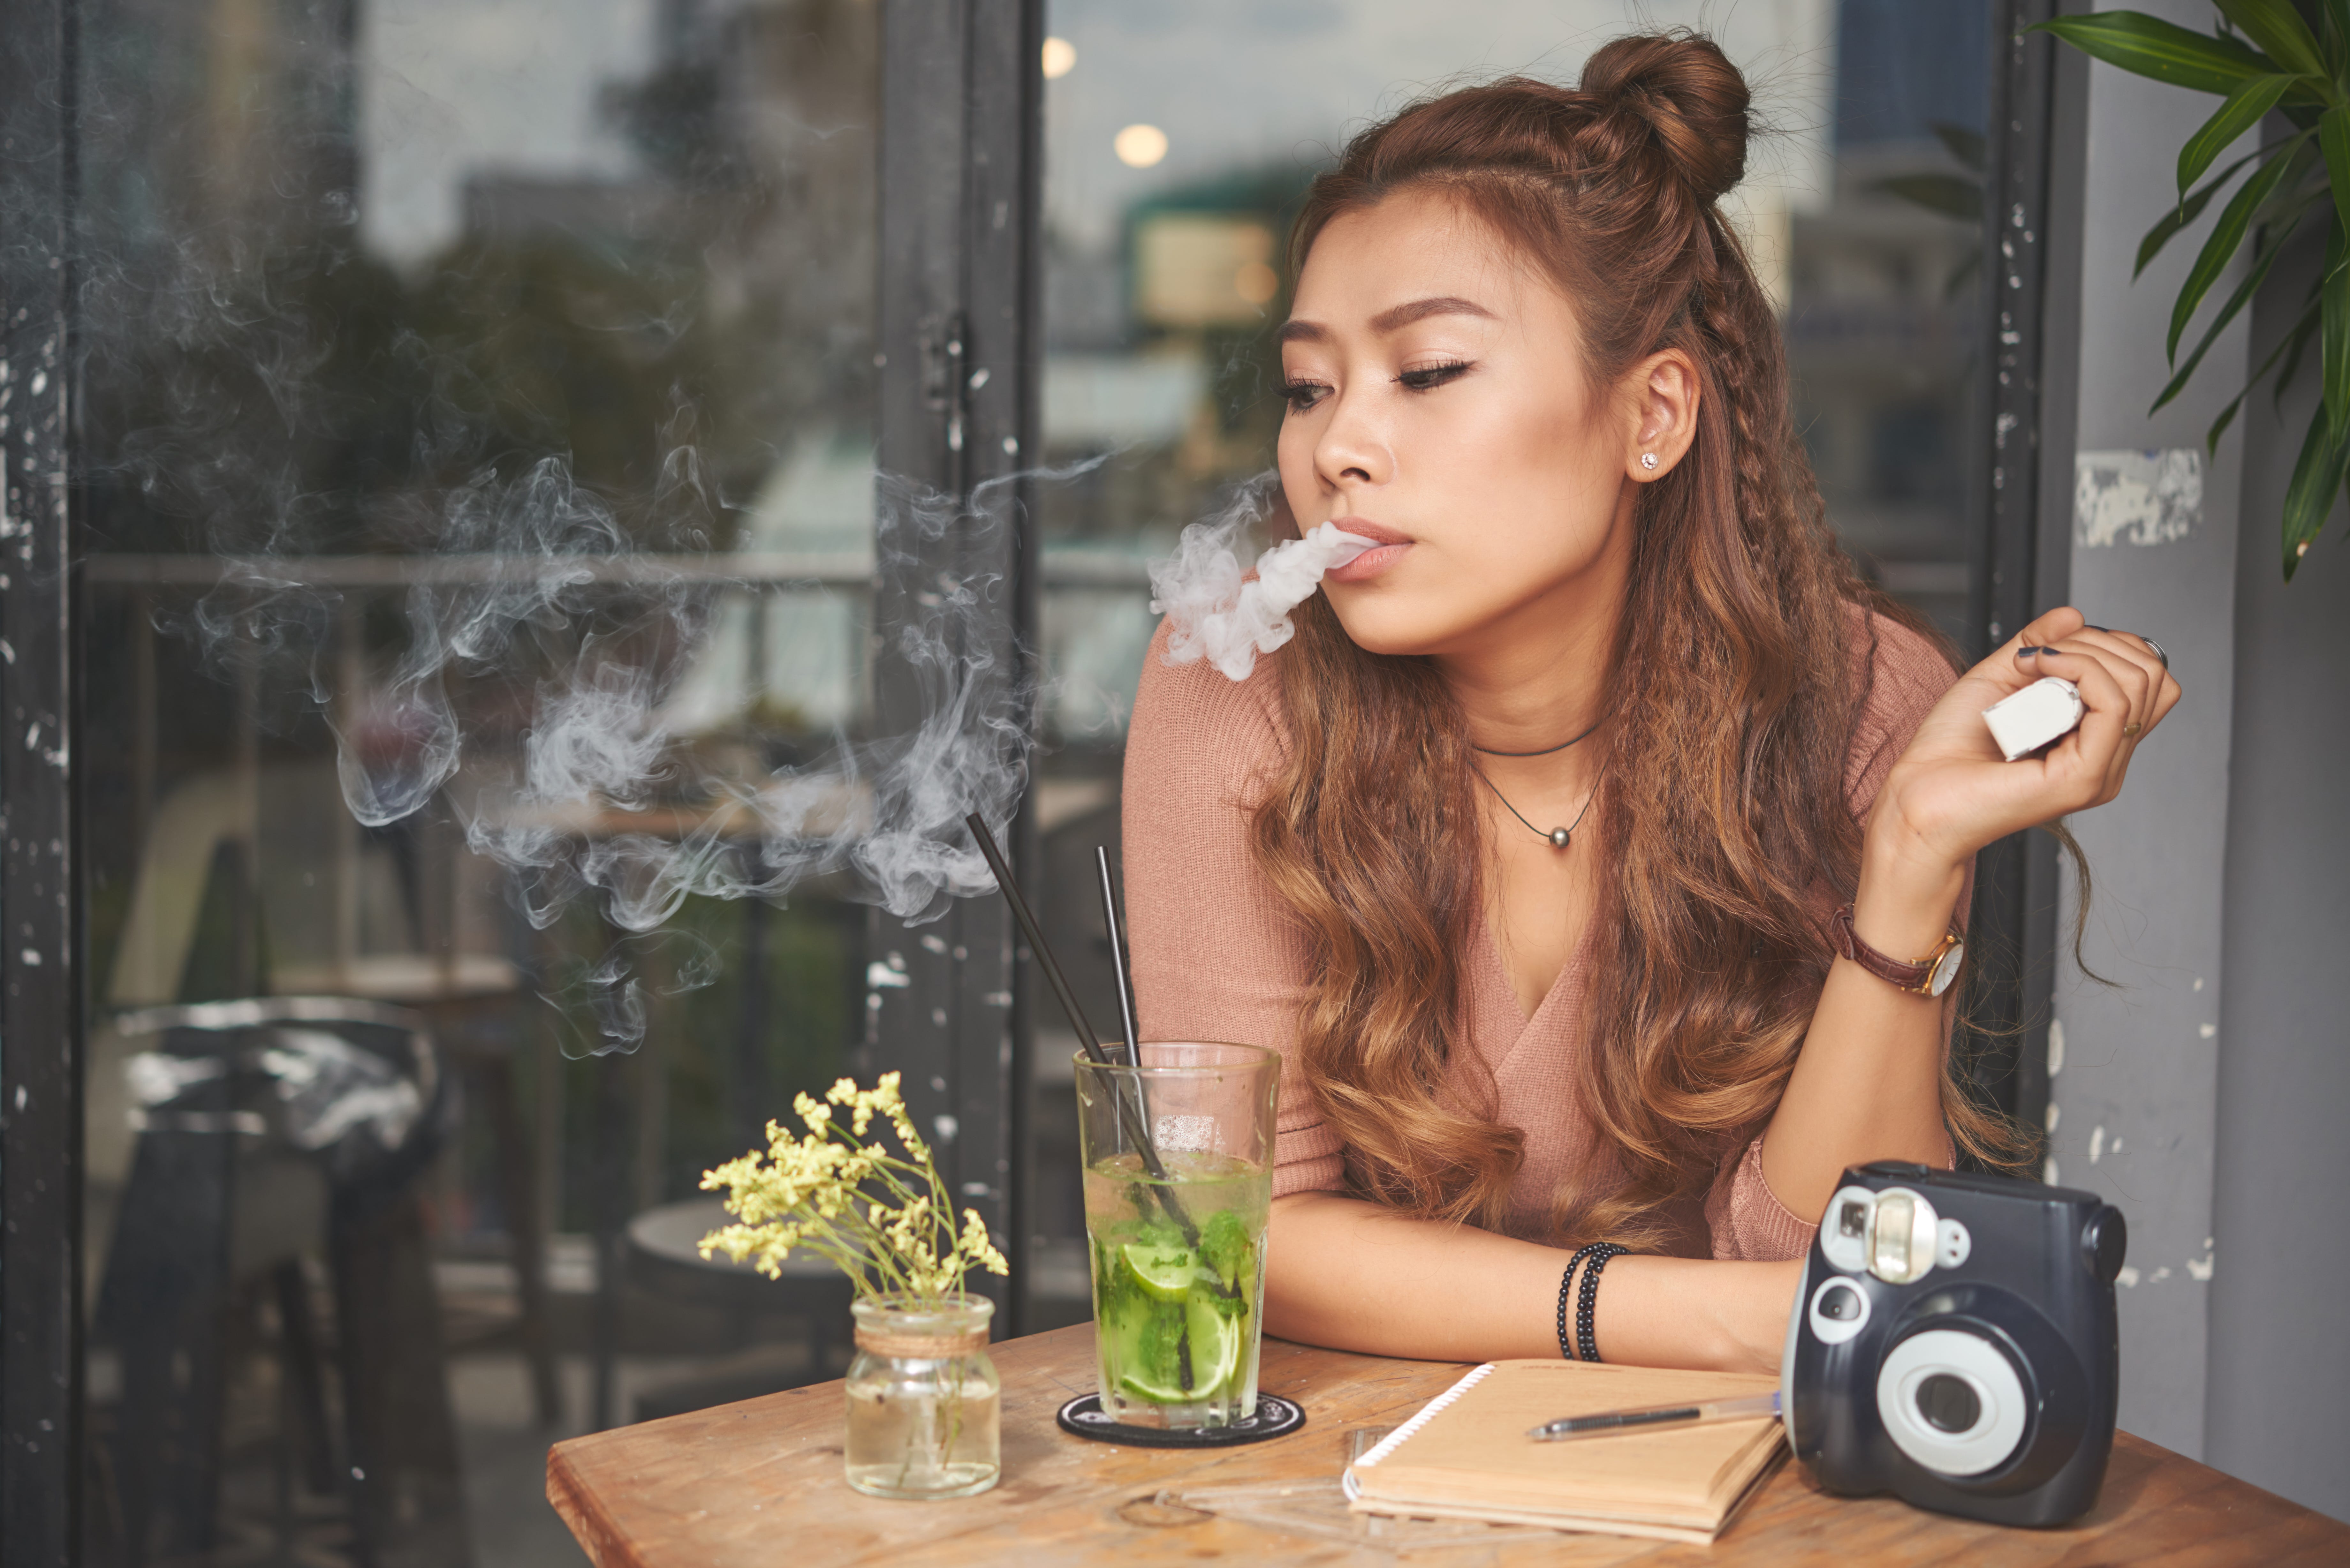 A young woman smoking an electronic cigarette.